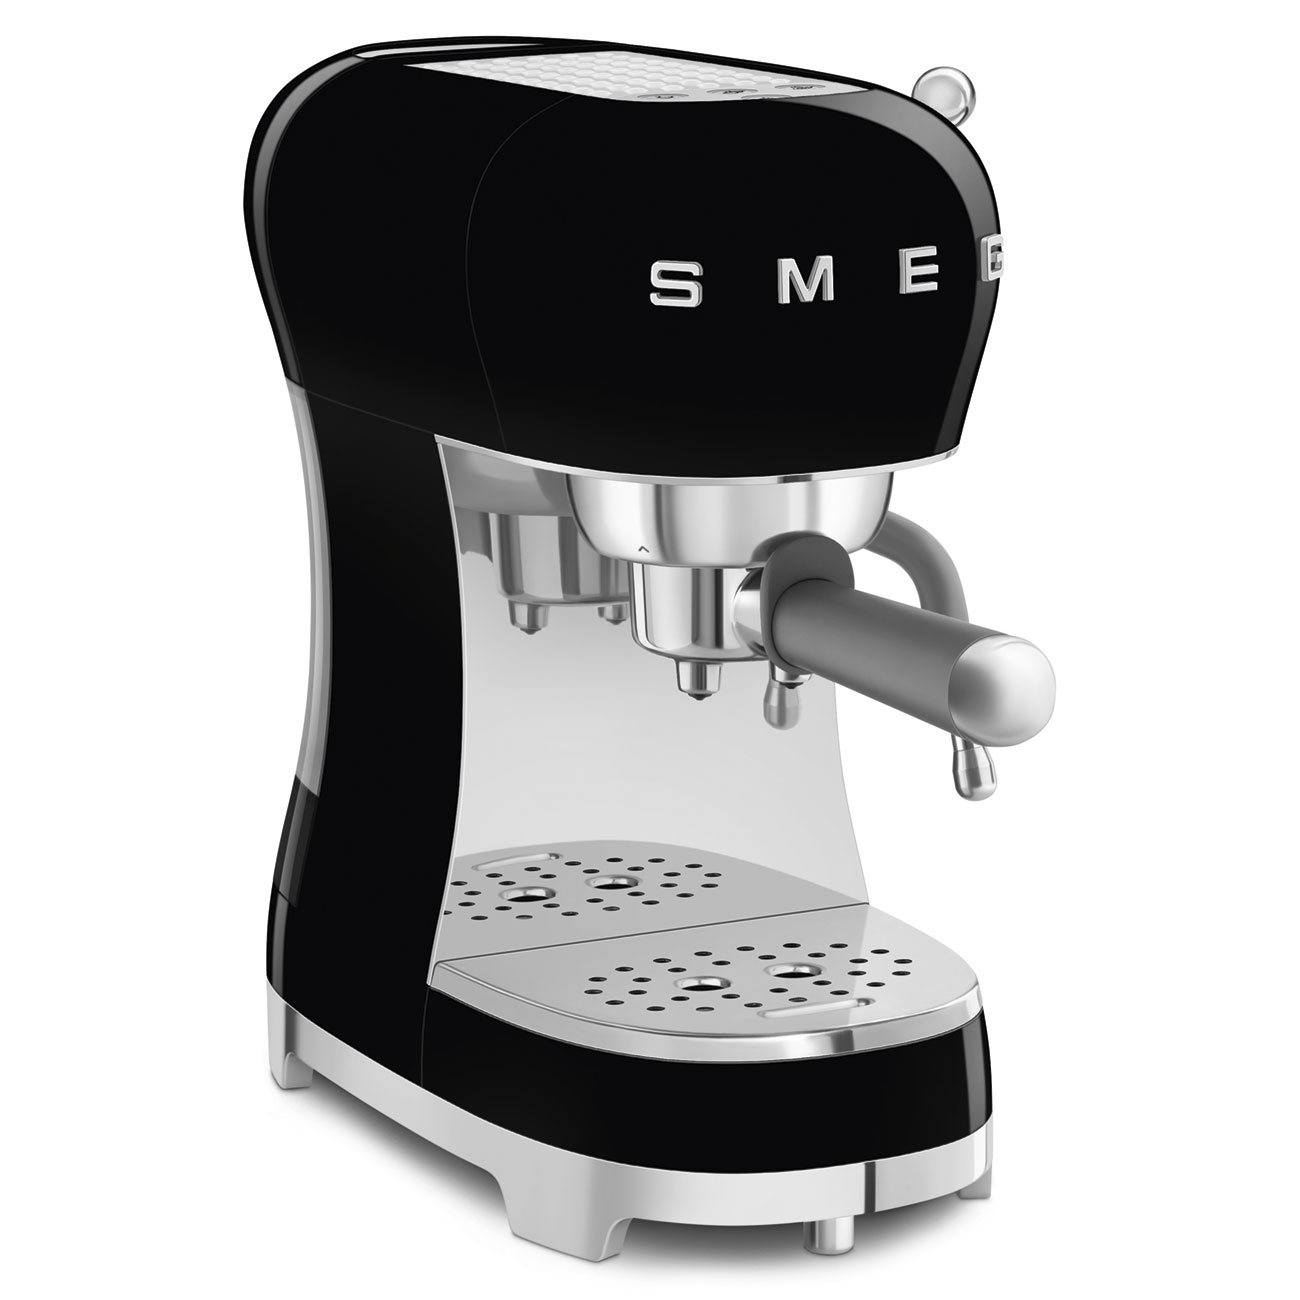 Smeg Black Espresso Manual Coffee Machine with Steam Wand_3